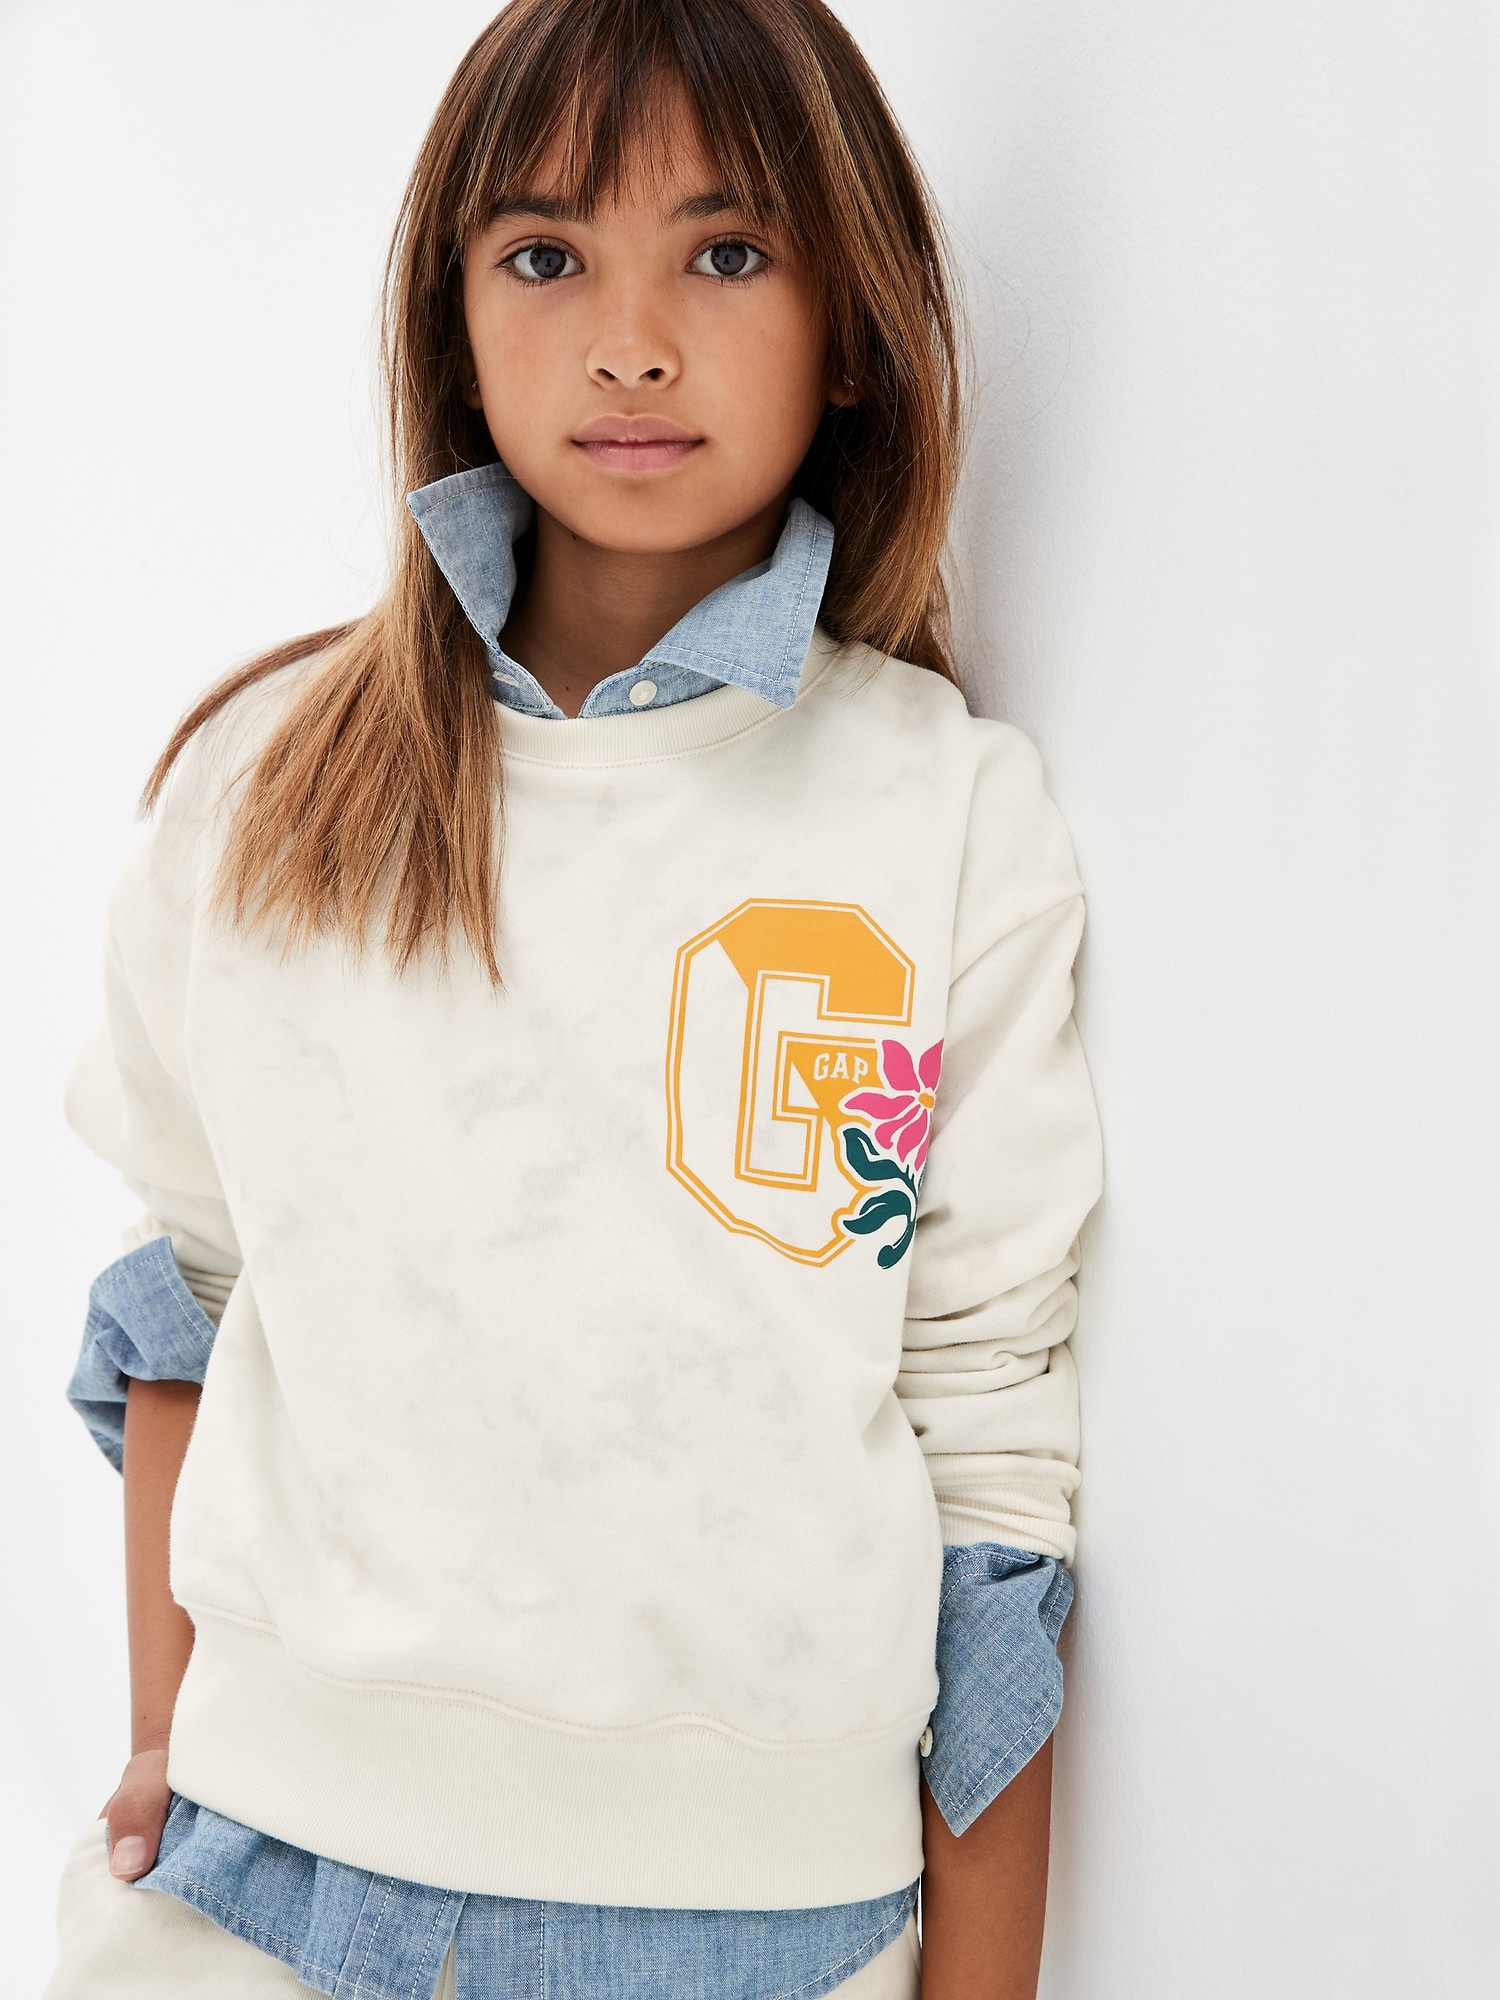 Kids Tie-Dye Graphic Sweatshirt | Gap Factory